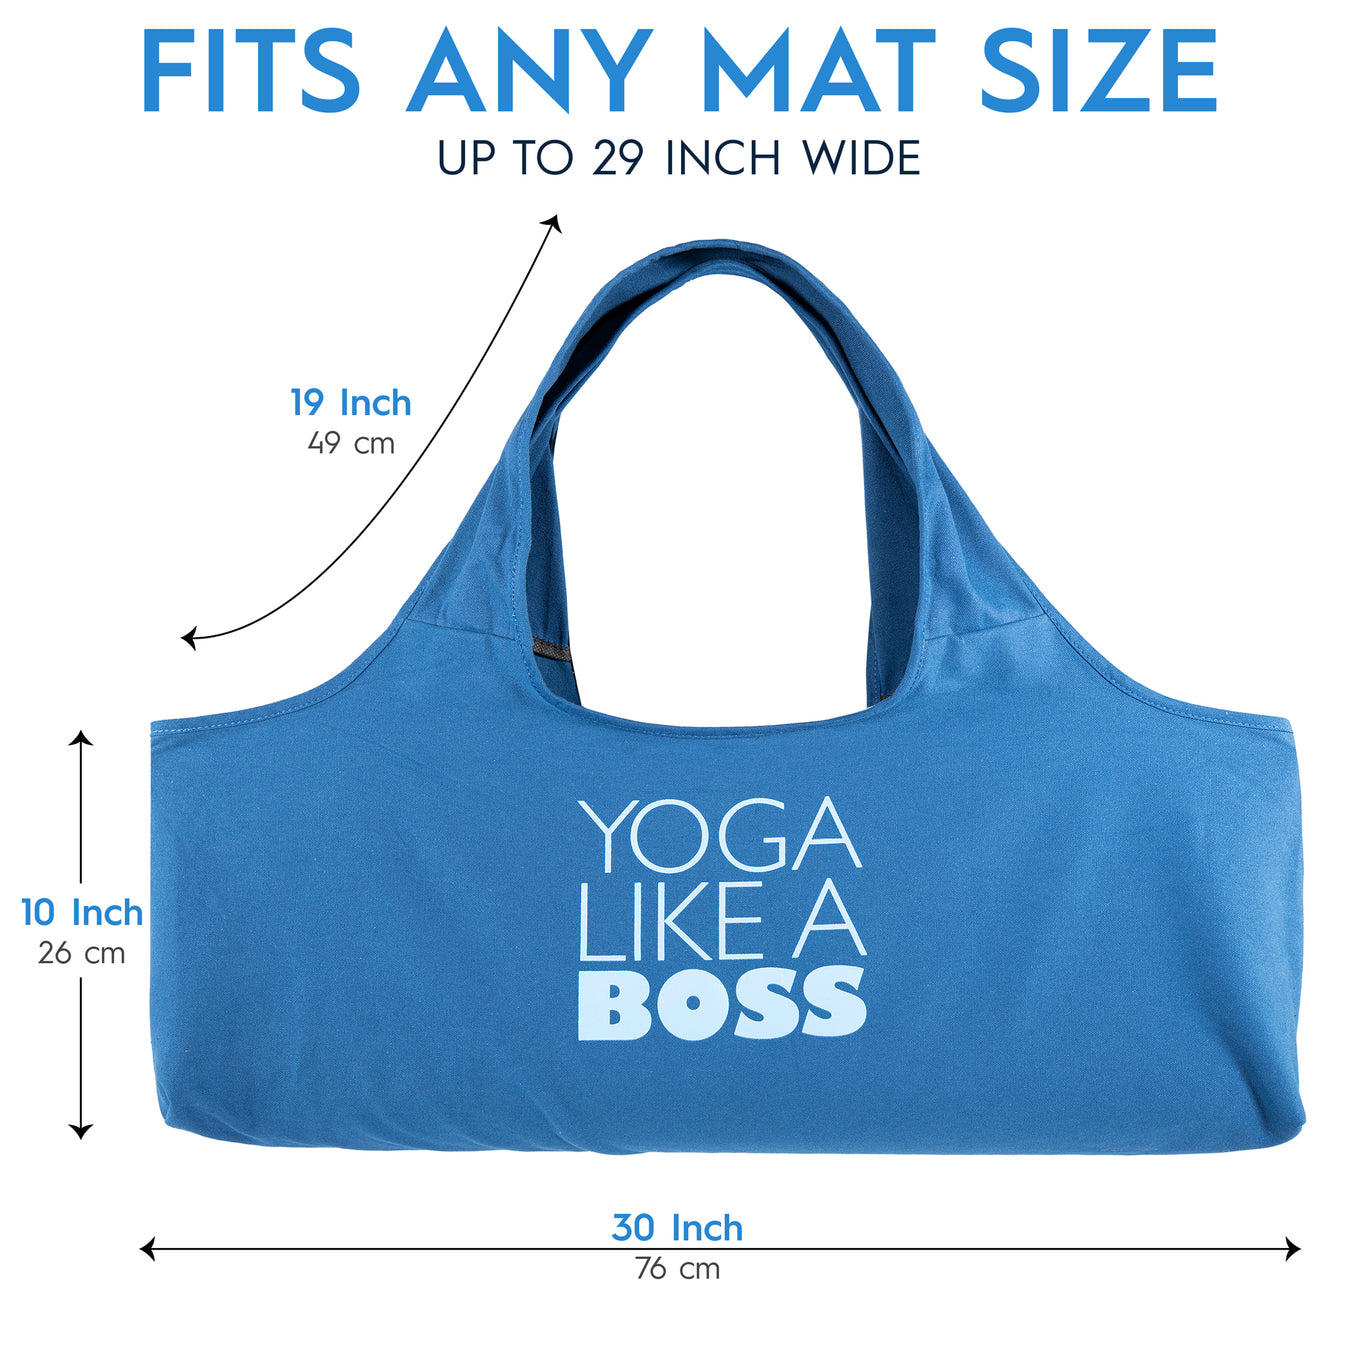 All Yoga Bags